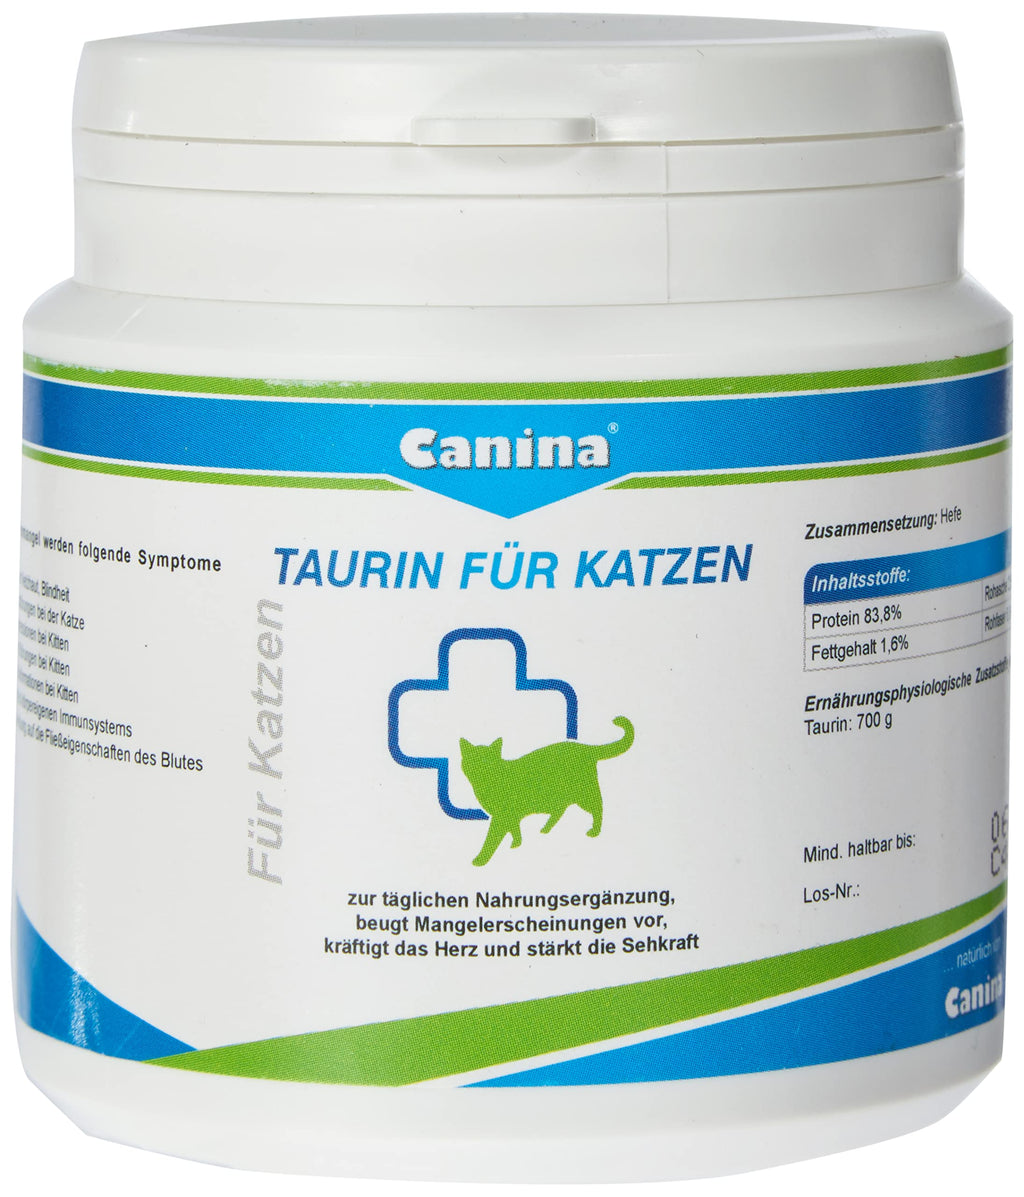 Canina Pharma Taurine for cats brownish 100 g (pack of 1) - PawsPlanet Australia